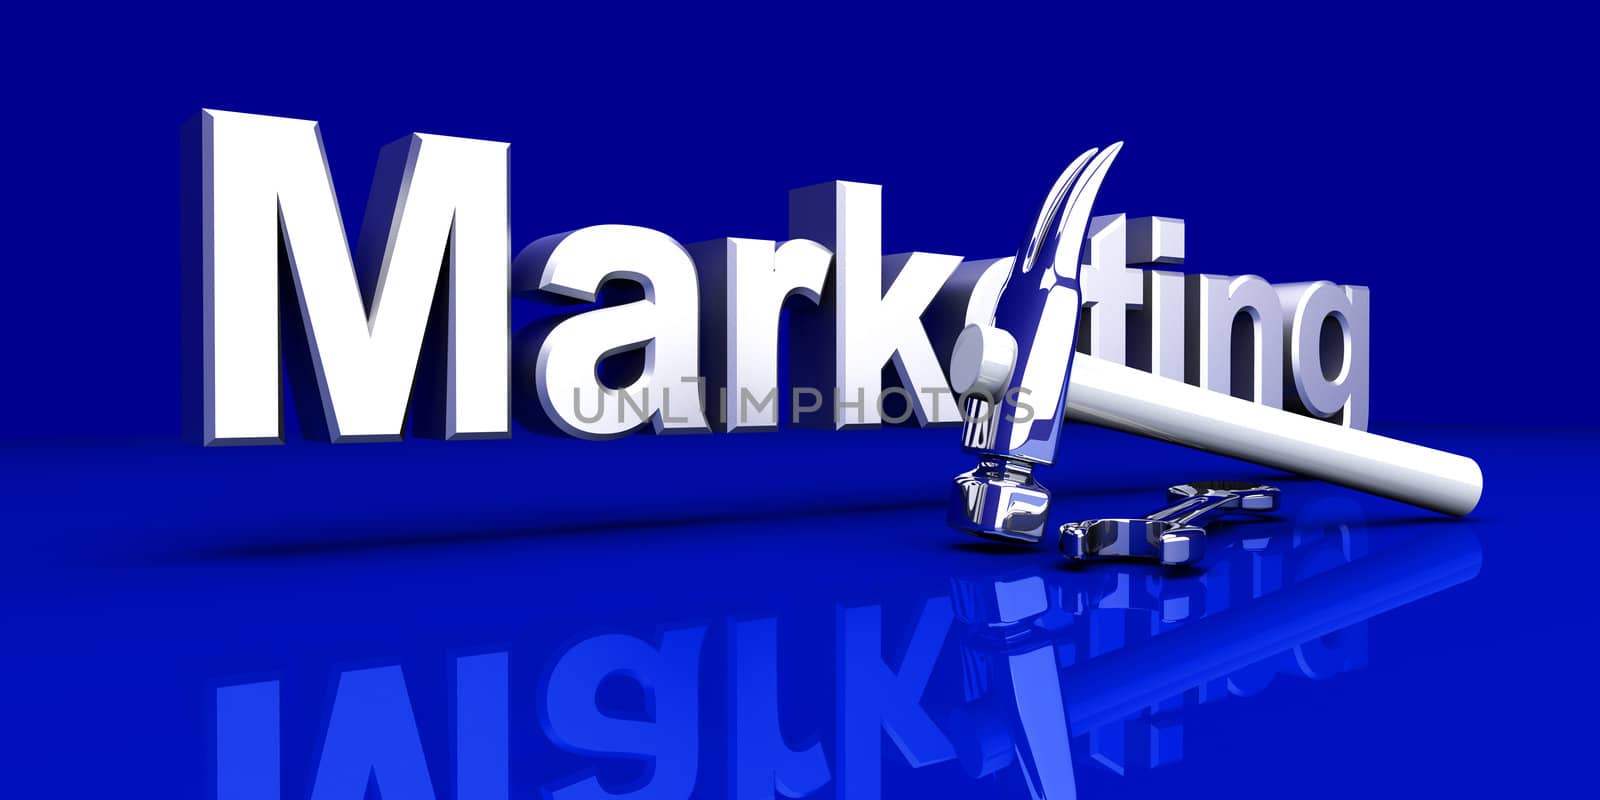 Tools for Marketing. 3D rendered Illustration. 